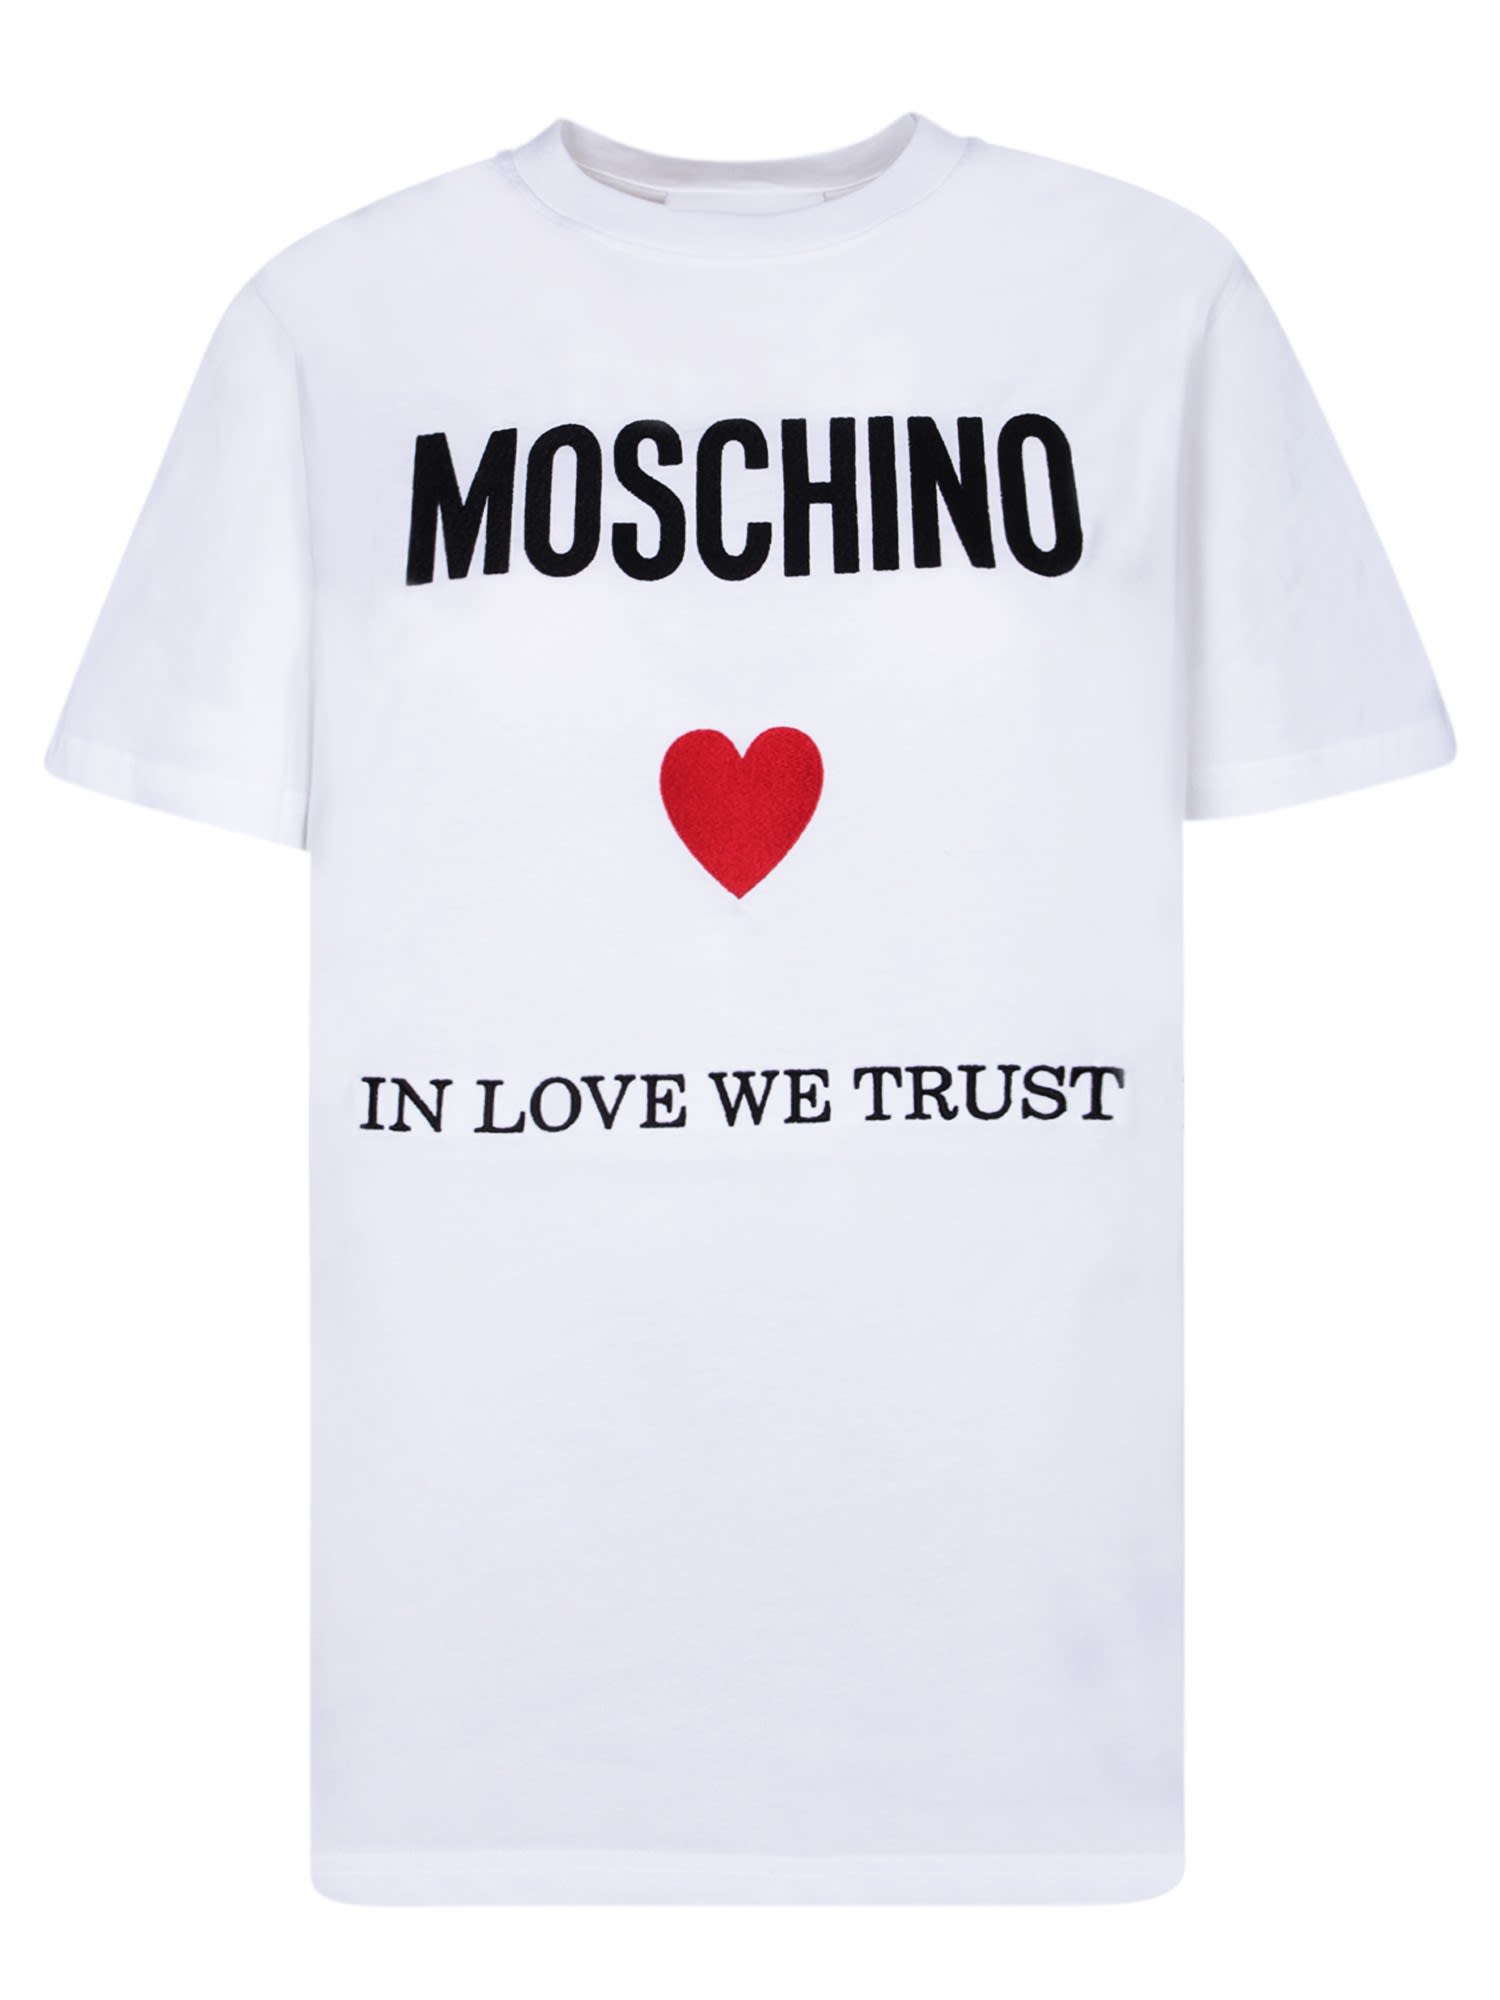 Moschino Logo Cotton T-shirt White And Black